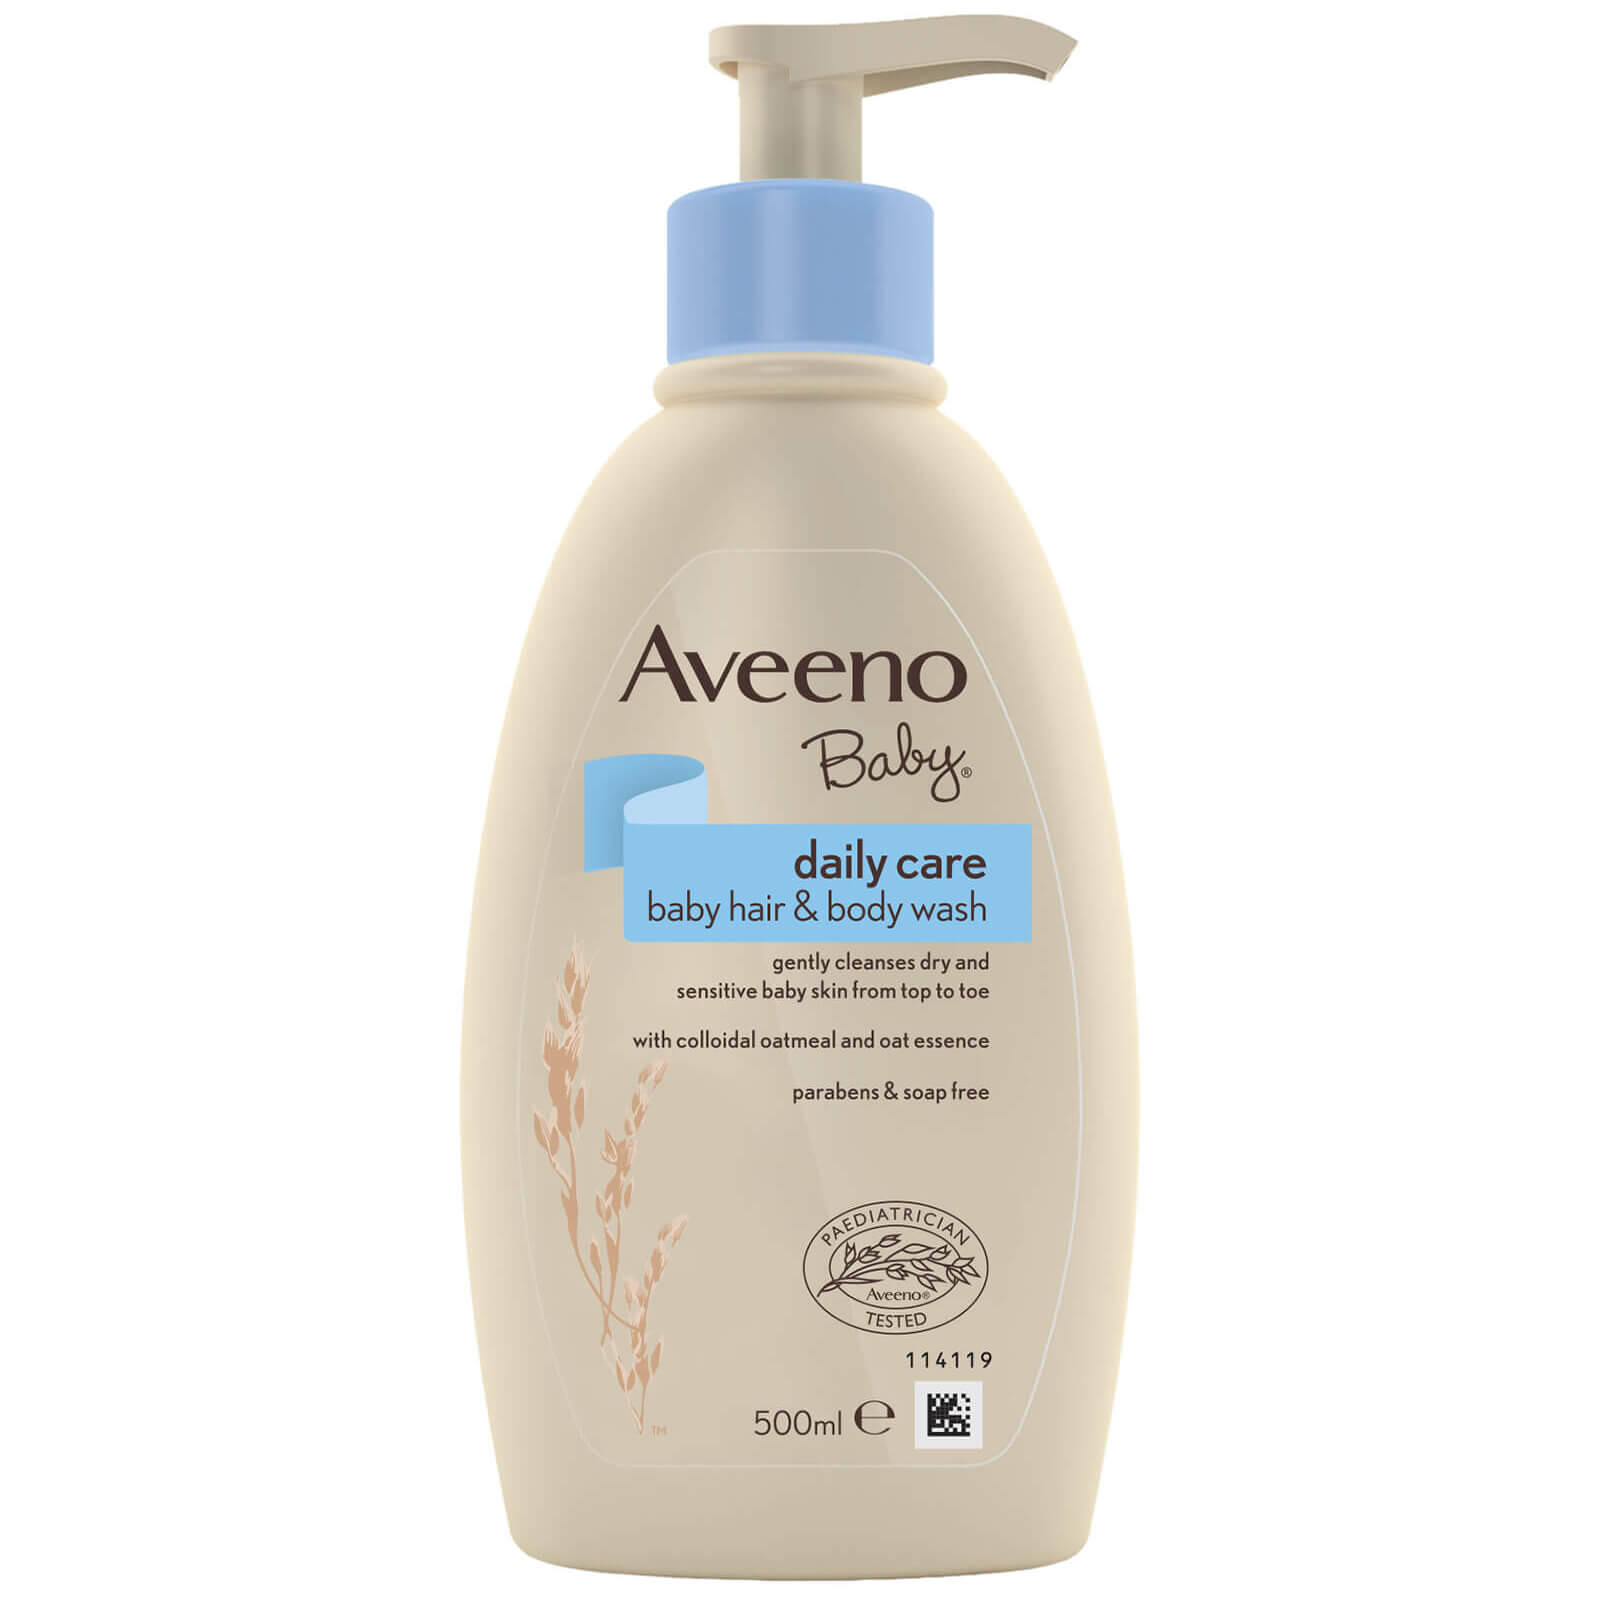 Aveeno Baby Daily Care Hair & Body Wash - 500ml